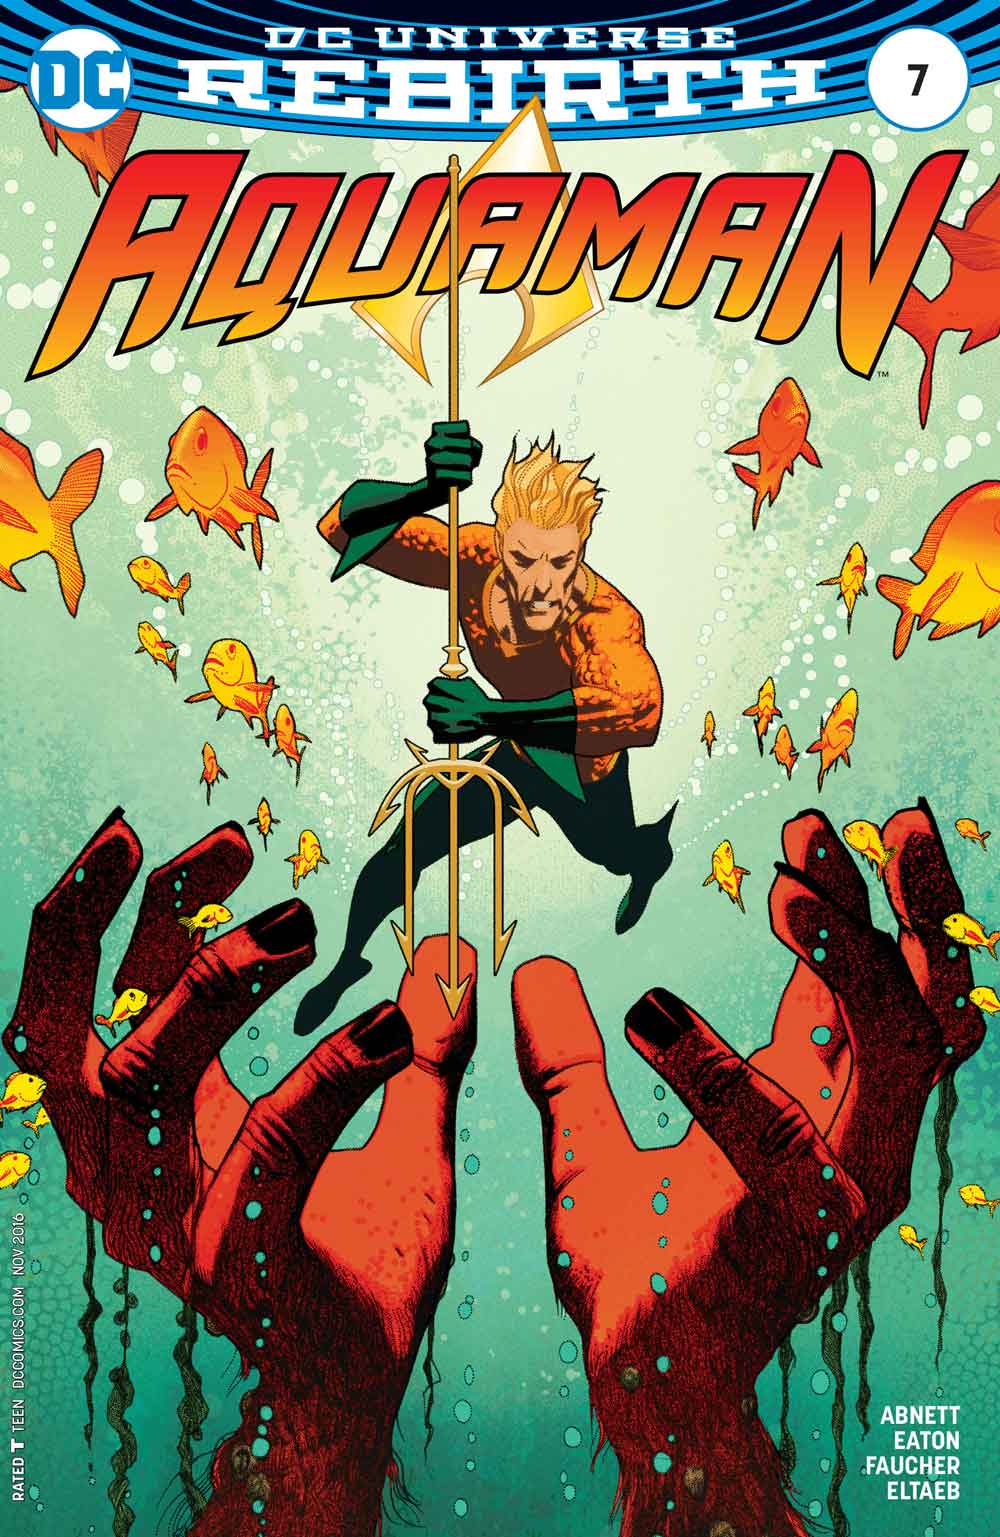 Variant cover by Joshua Middleton/Aquaman #7 variant cover by Joshua Middleton